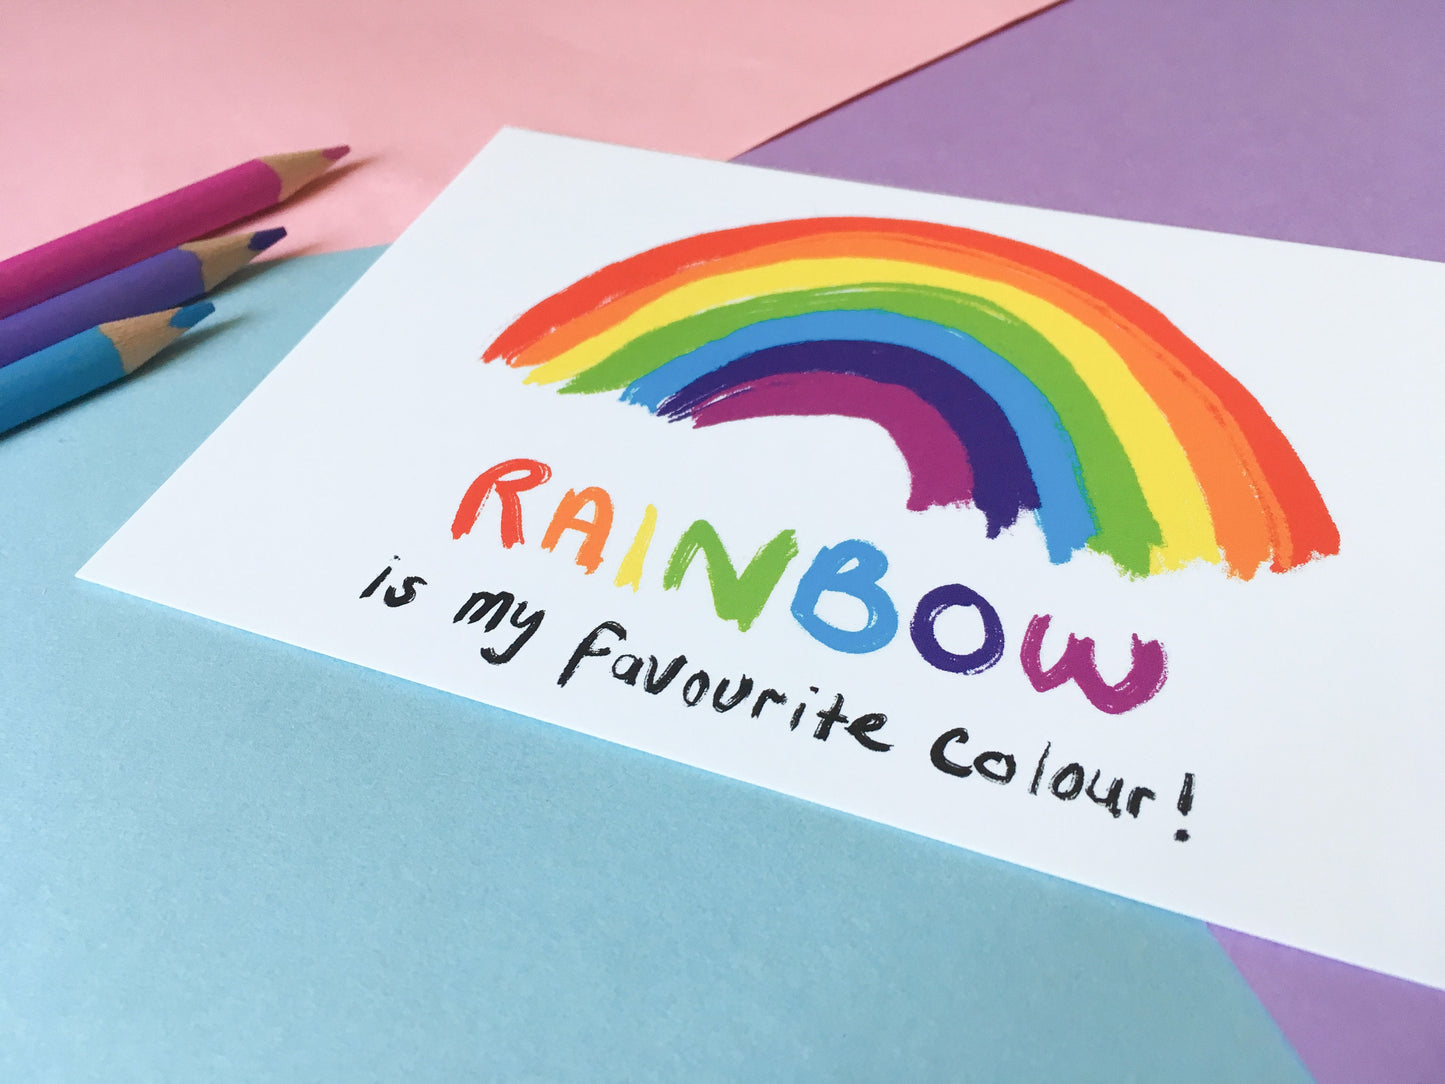 Rainbow is my Favourite Colour, A6 Motivational Postcard